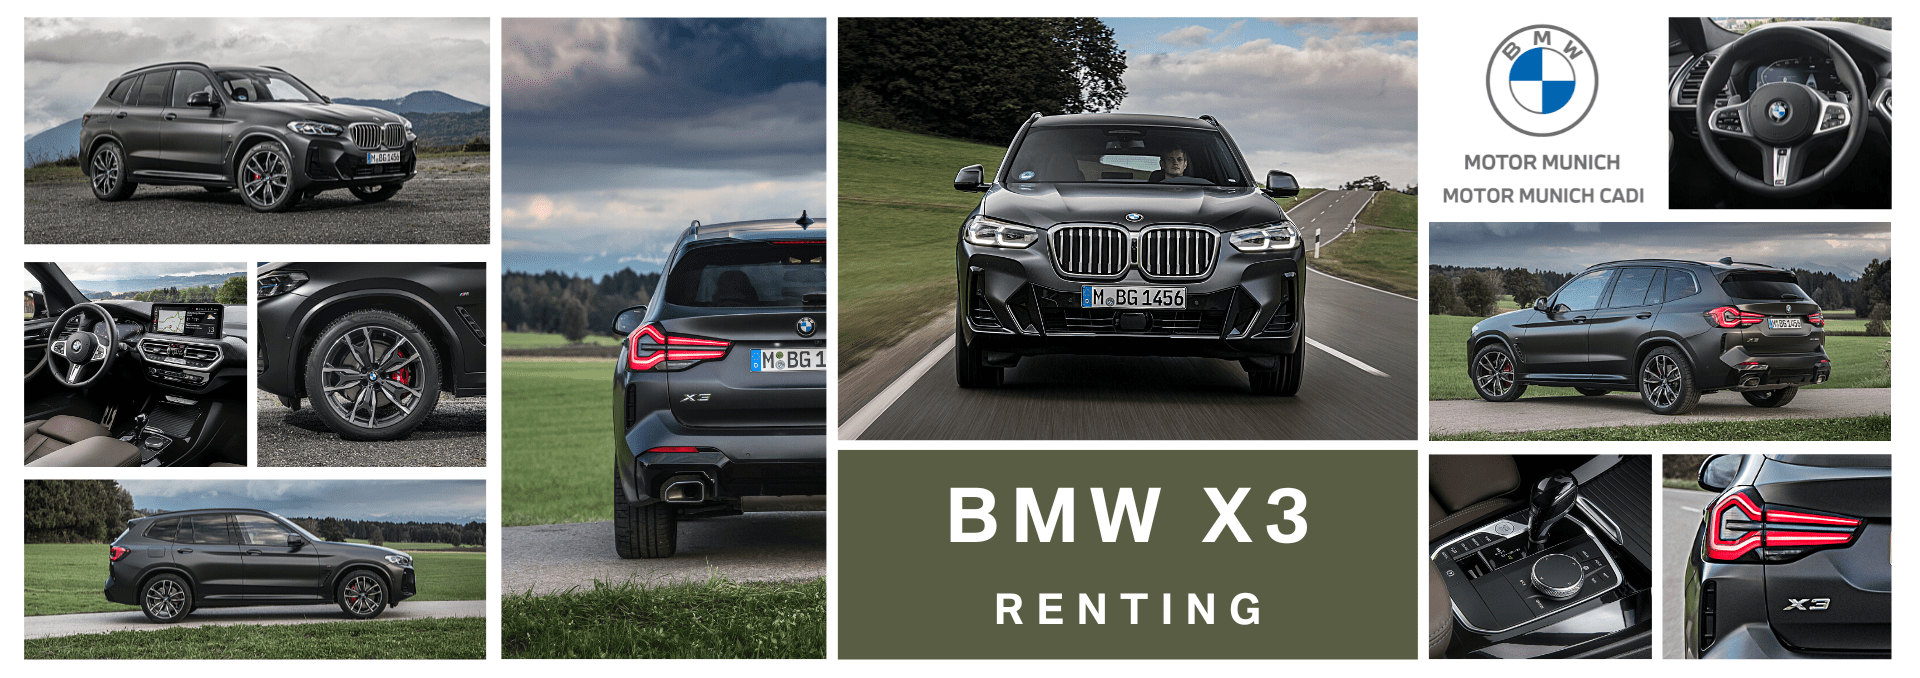 BMW X3 renting q4